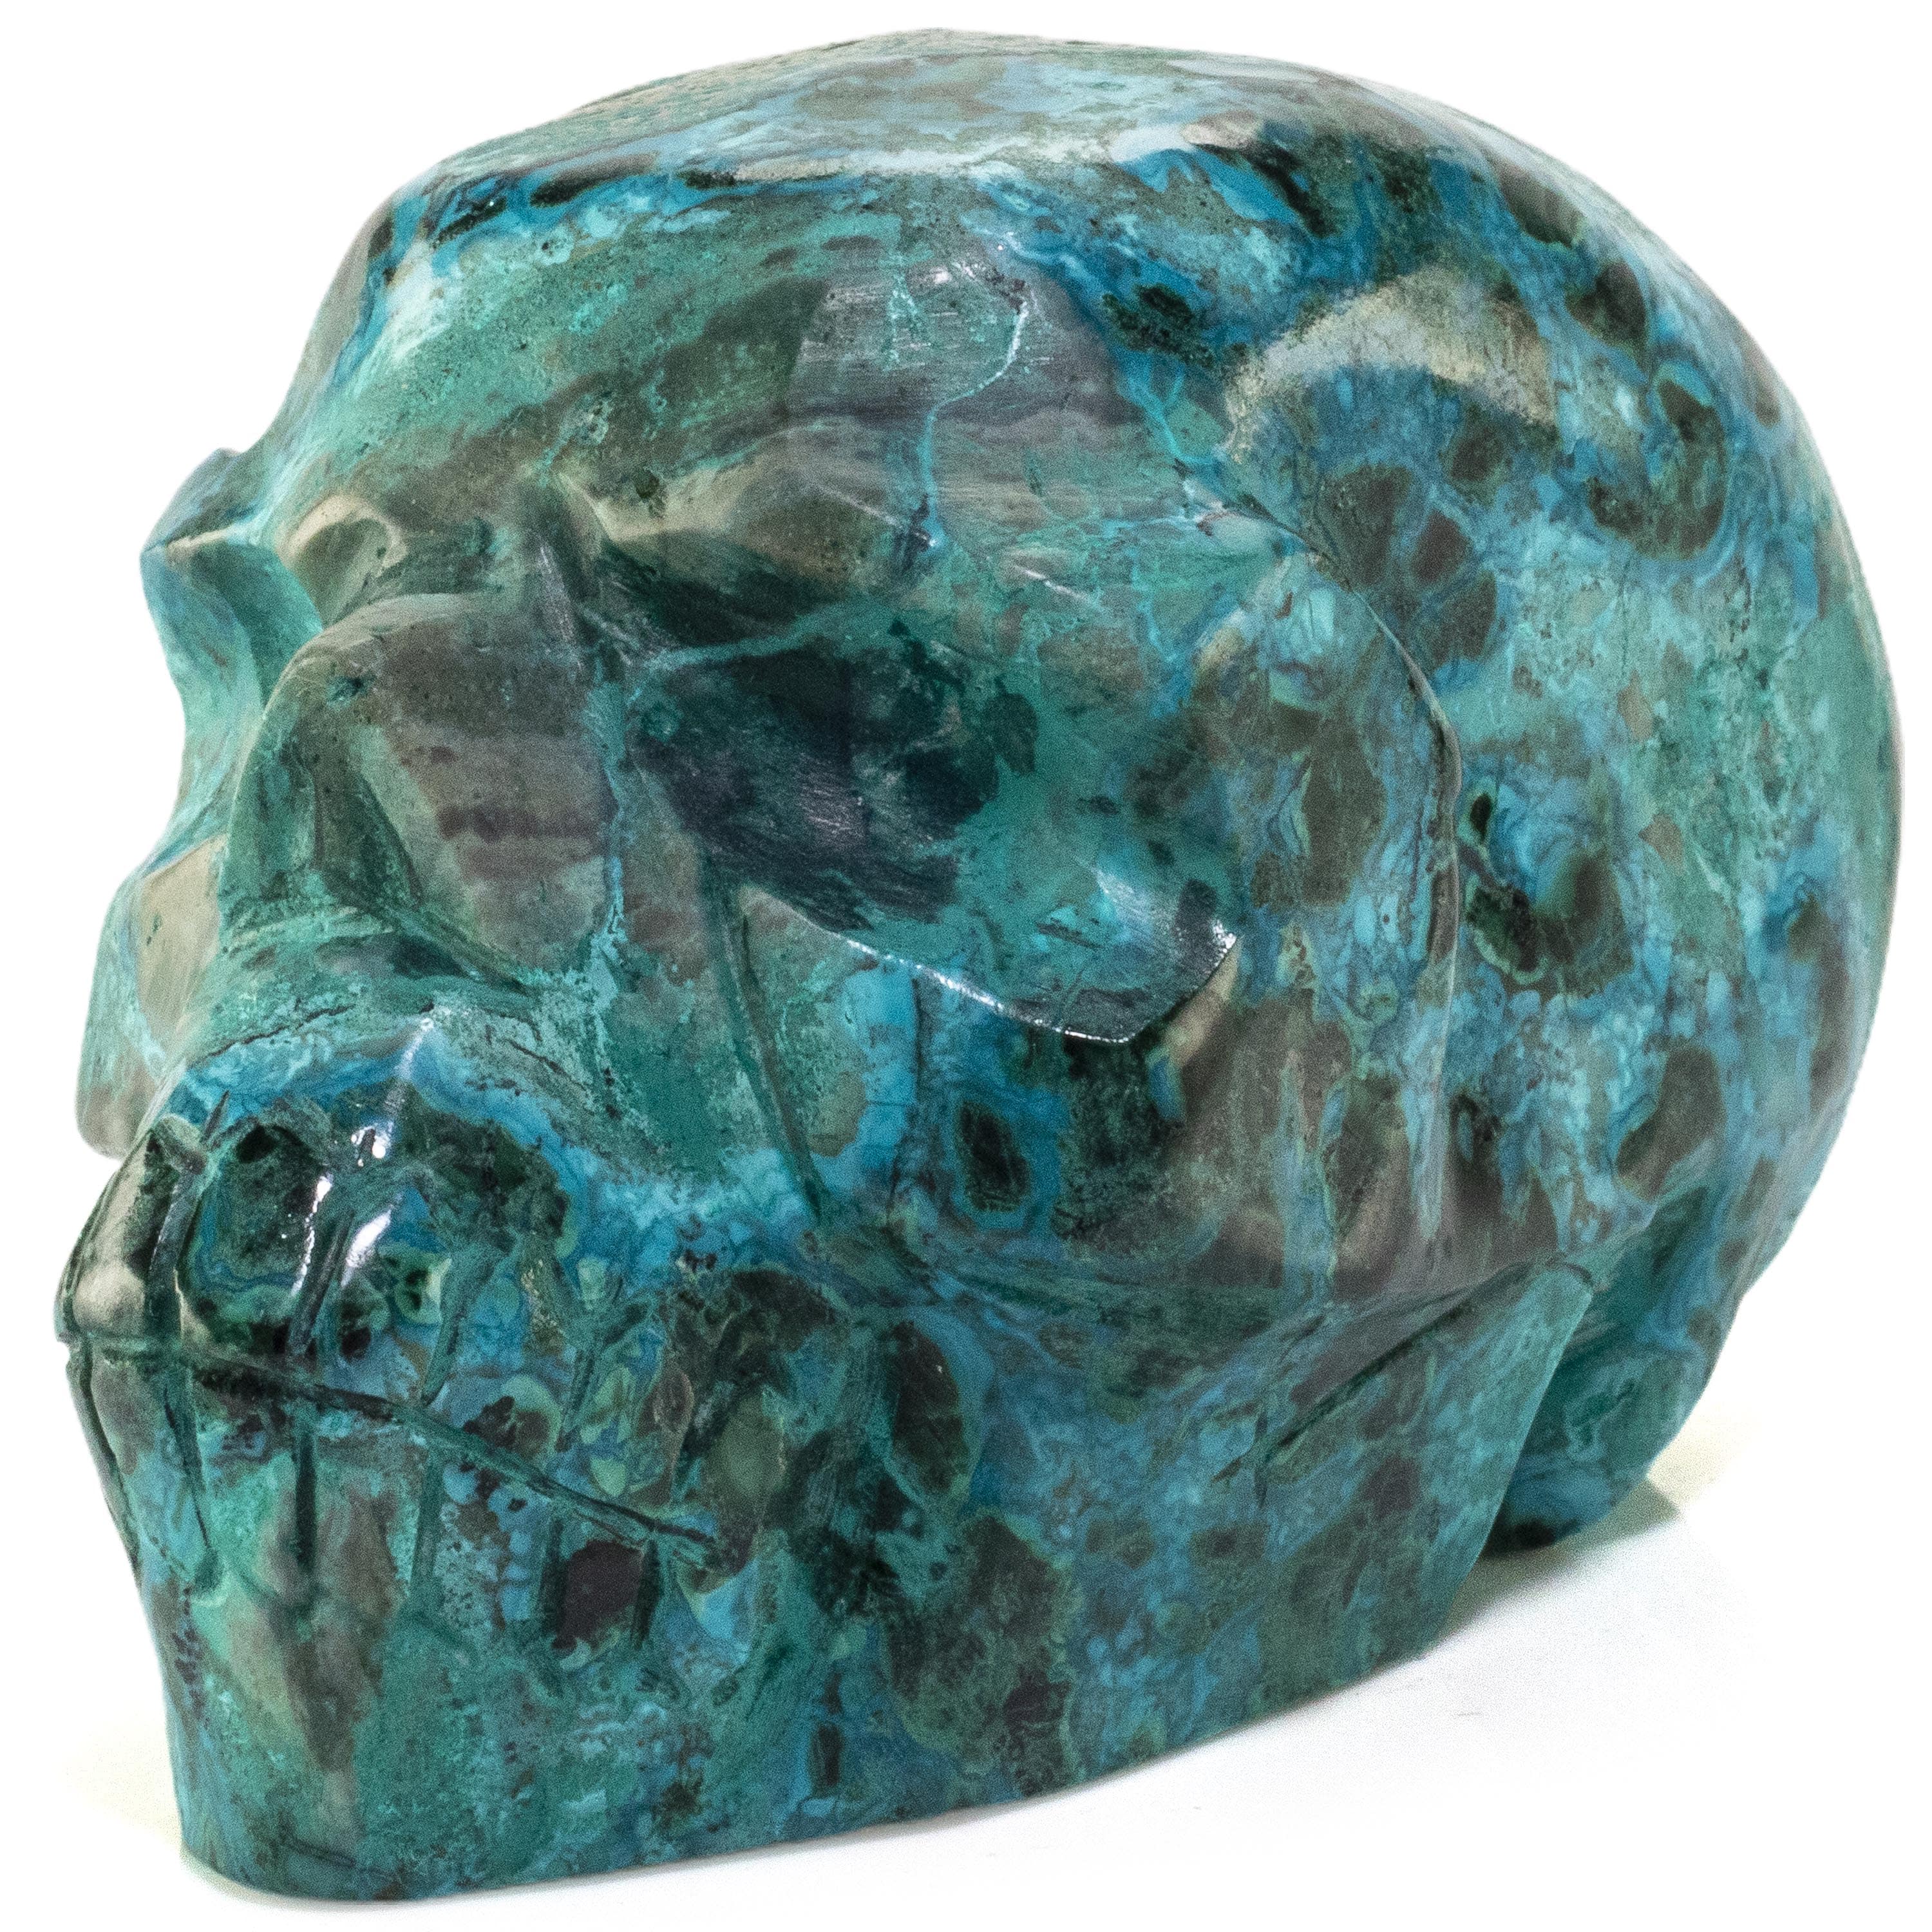 Kalifano Malachite Chrysocolla Skull Carving 3.5" / 297g SK1400-CRY.001